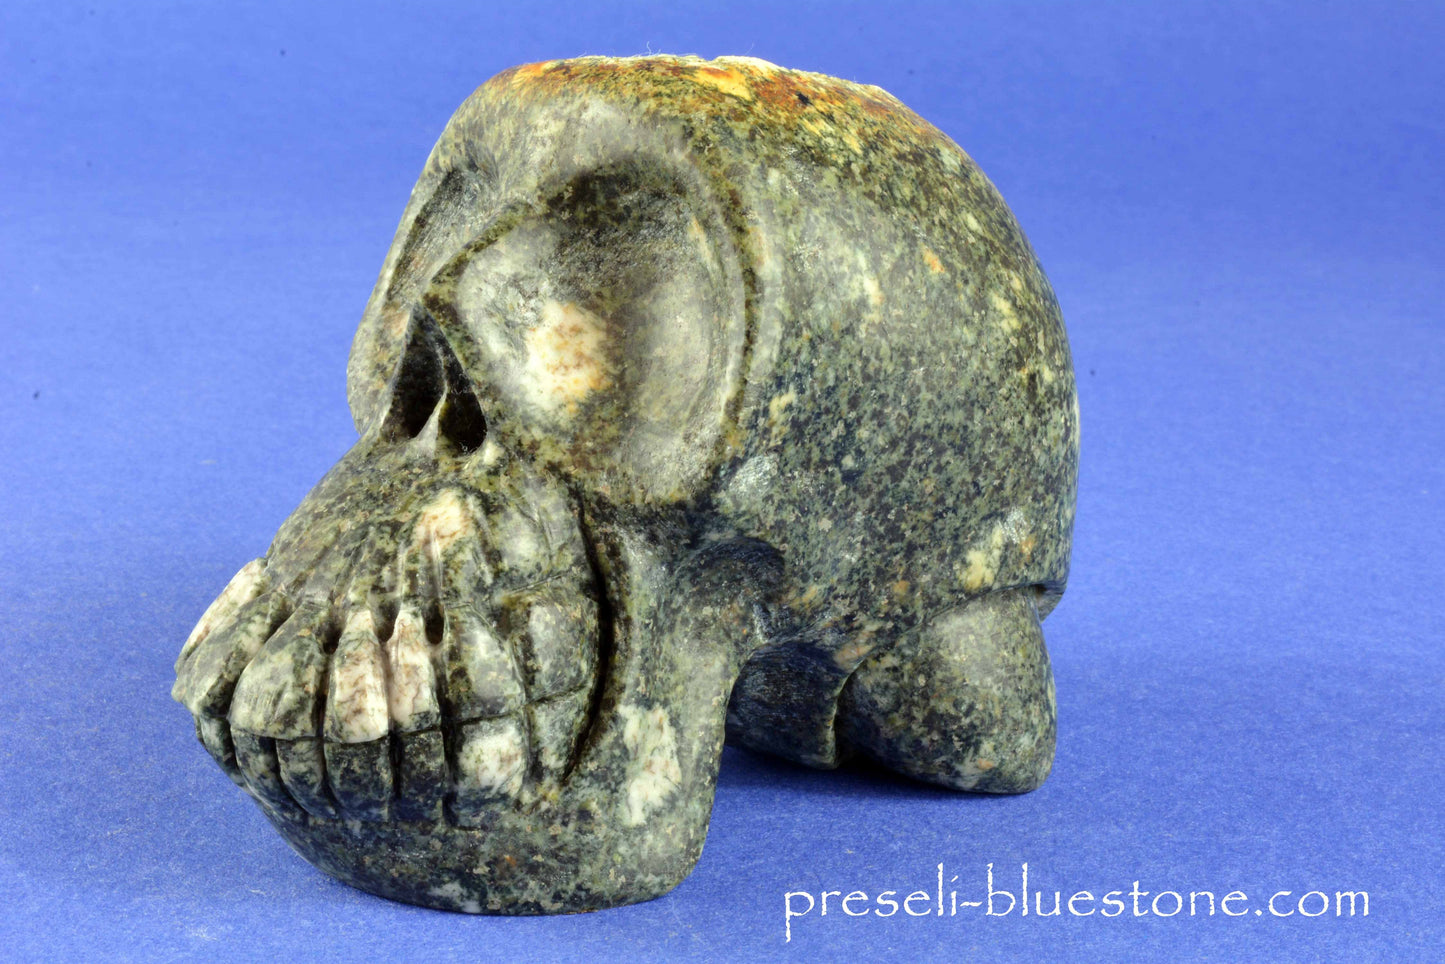 Preseli Bluestone Skull